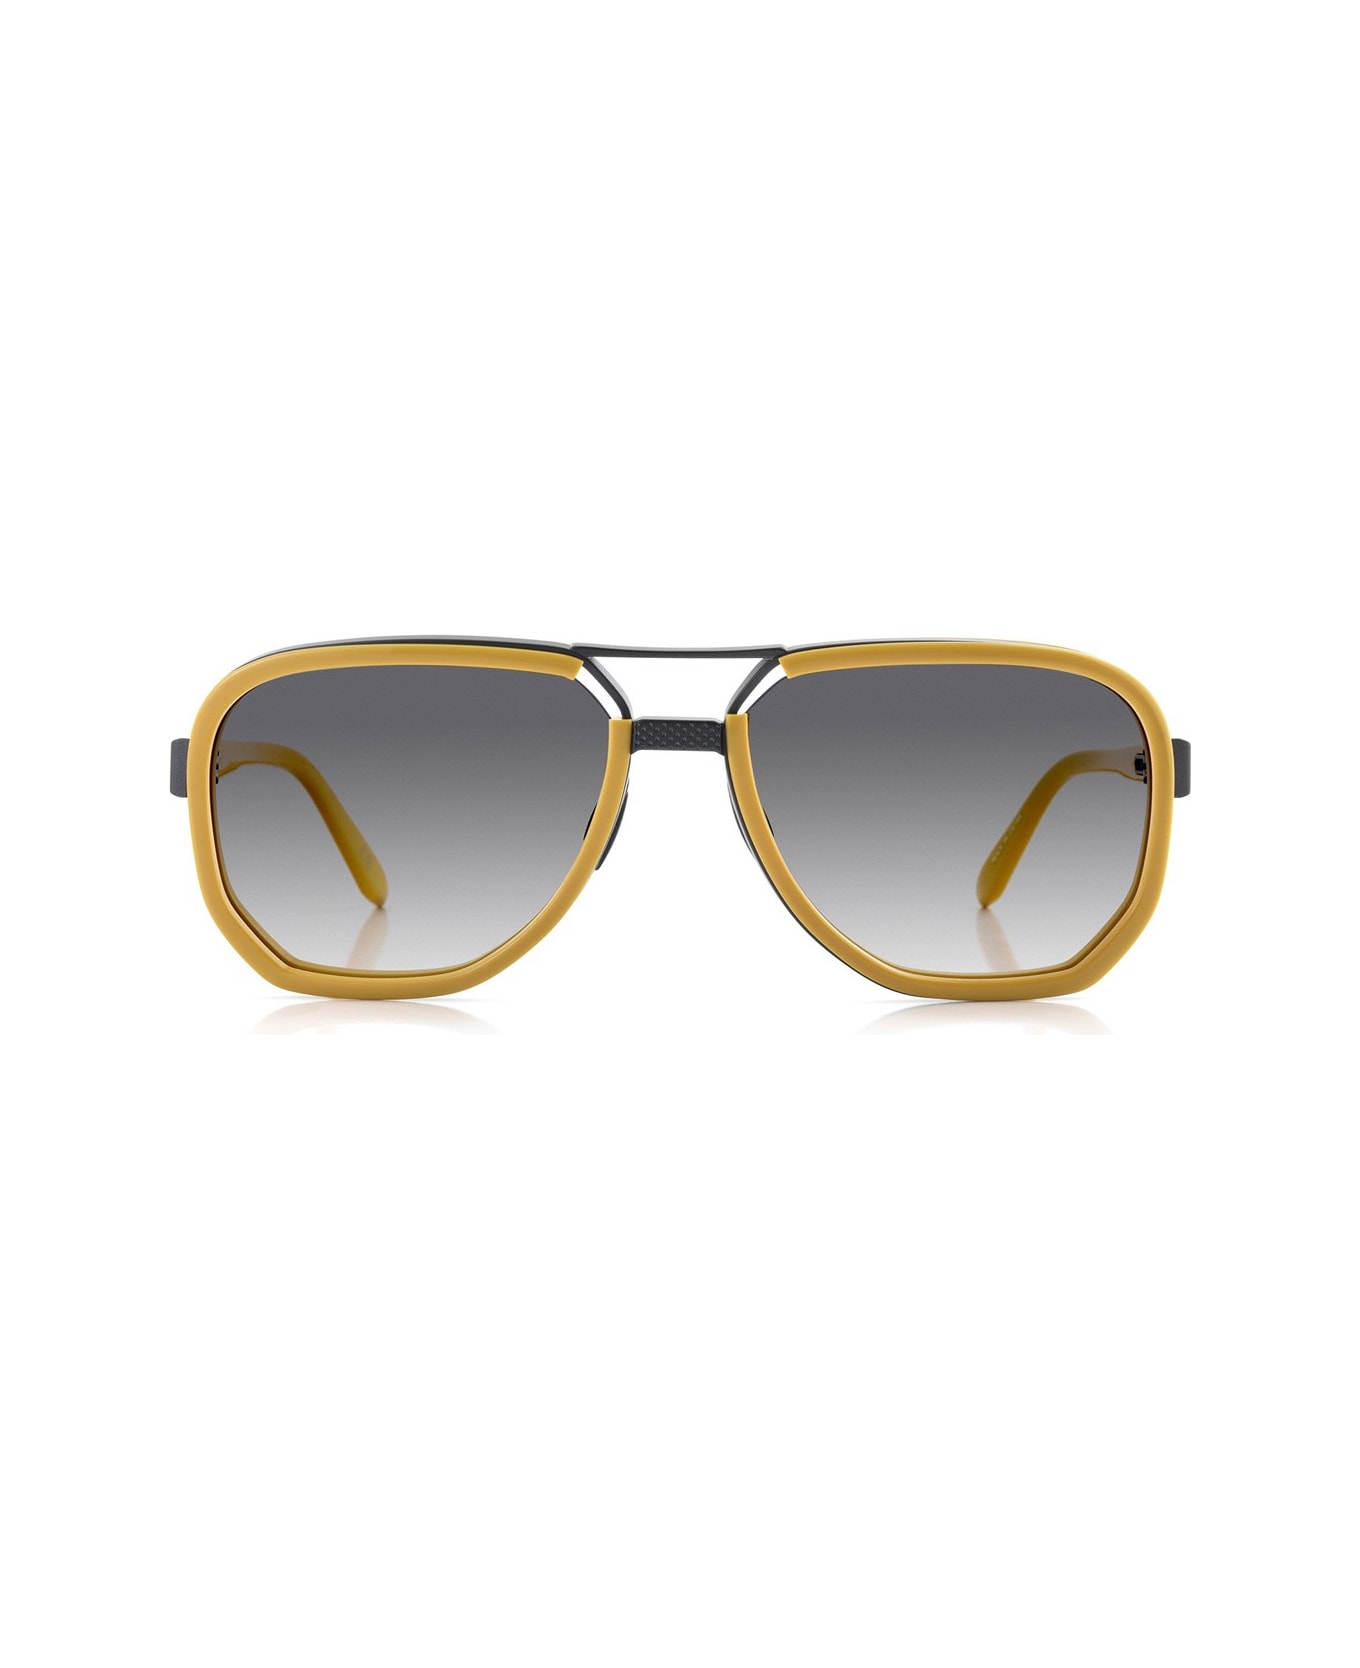 Robert La Roche Rlr S282 Sunglasses - Giallo サングラス